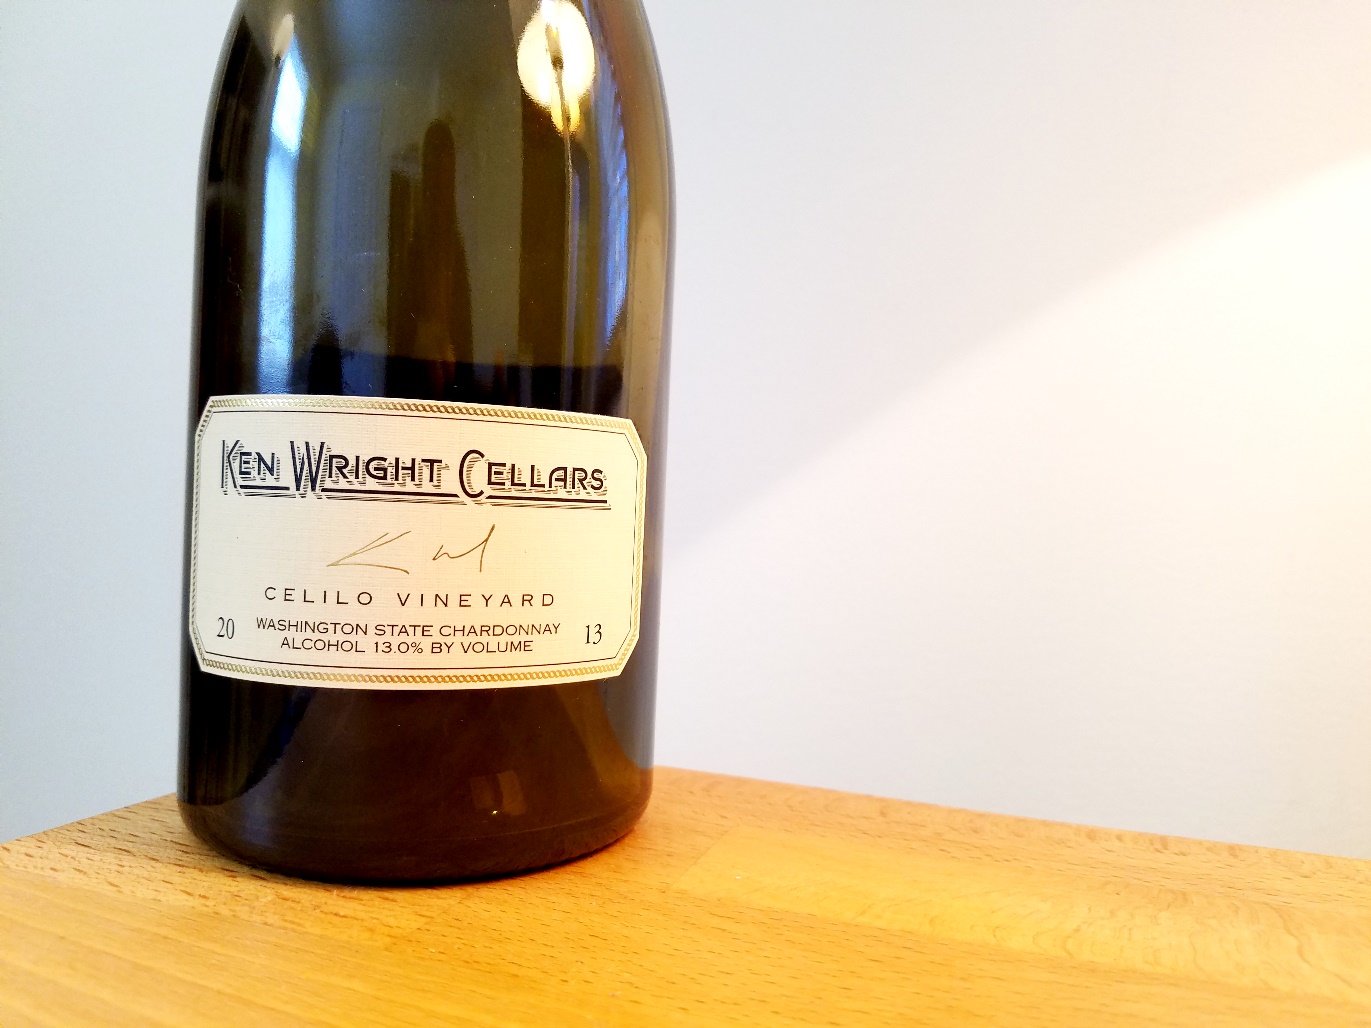 Ken Wright Cellars, Chardonnay 2013, Celilo Vineyard, Columbia River Gorge, Washington, Wine Casual